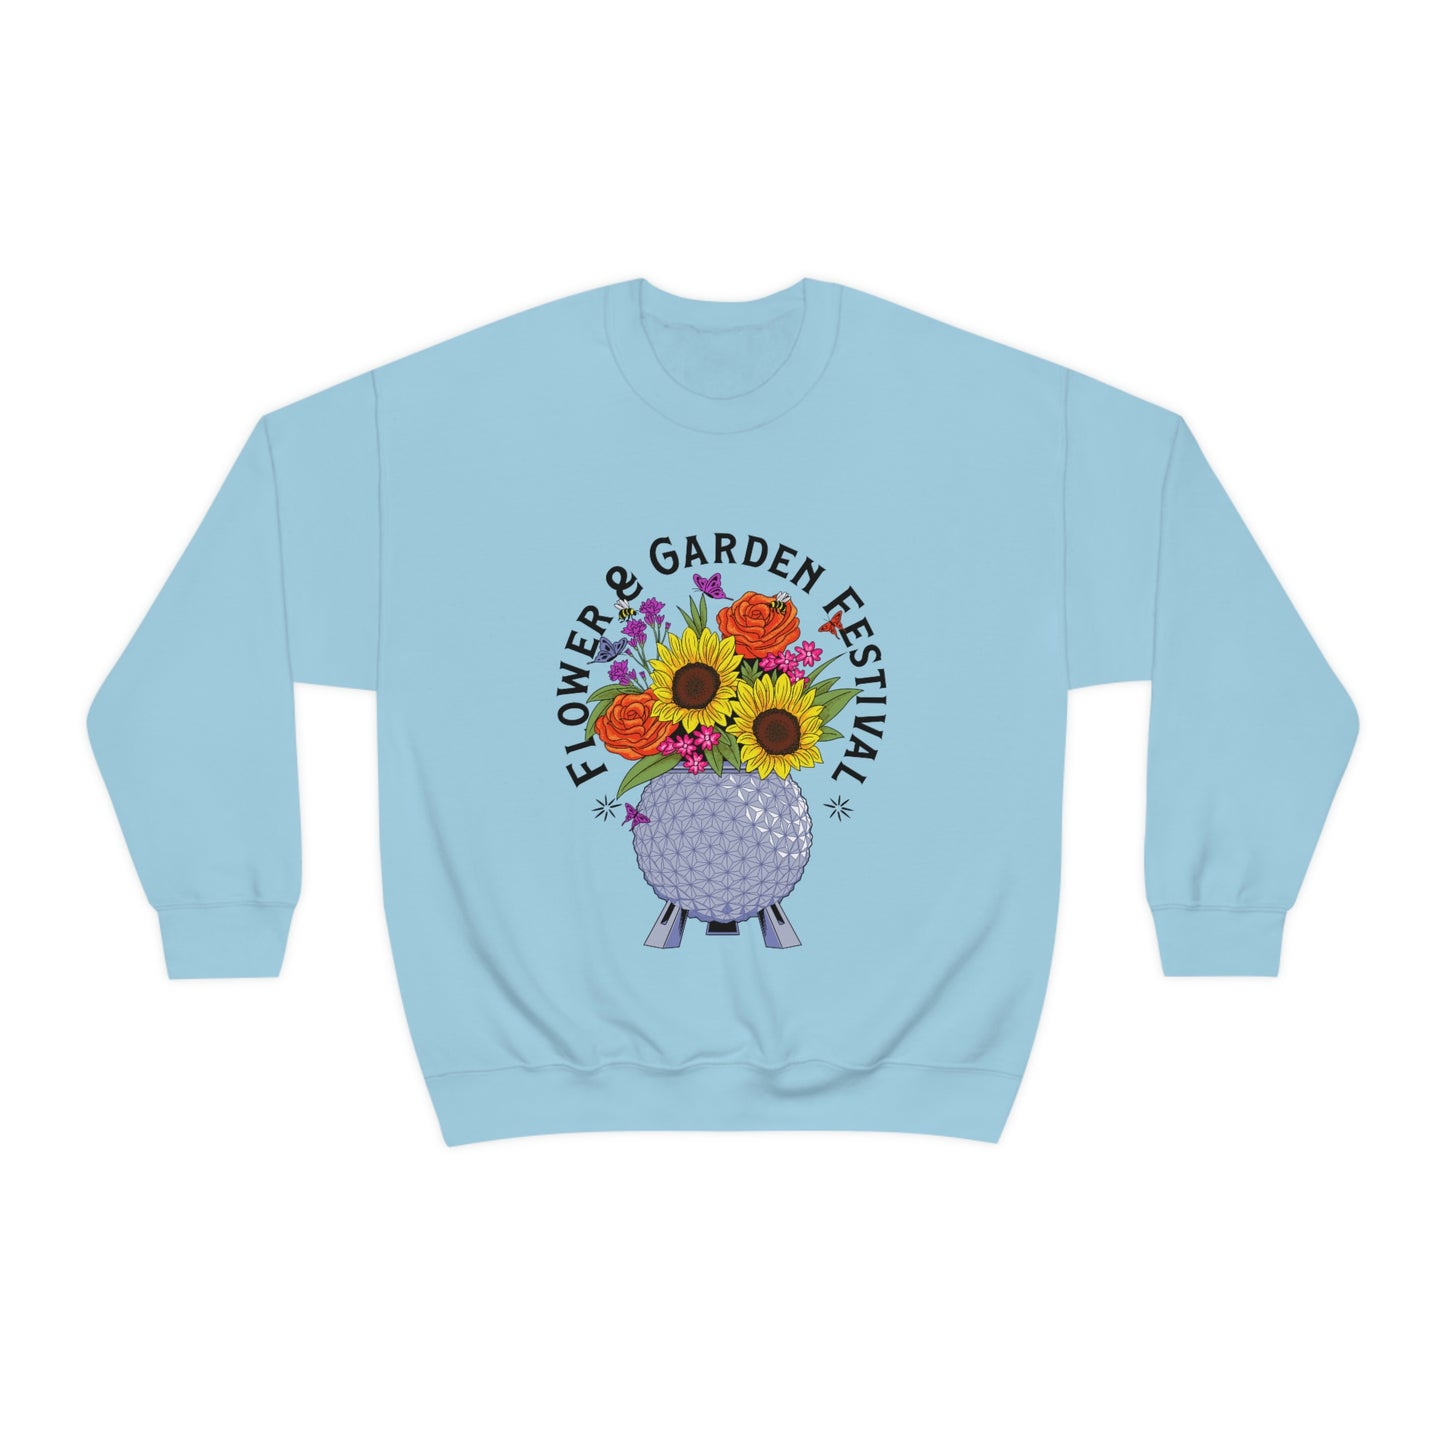 Flower & Garden Festival - Adult Crewneck Sweatshirt